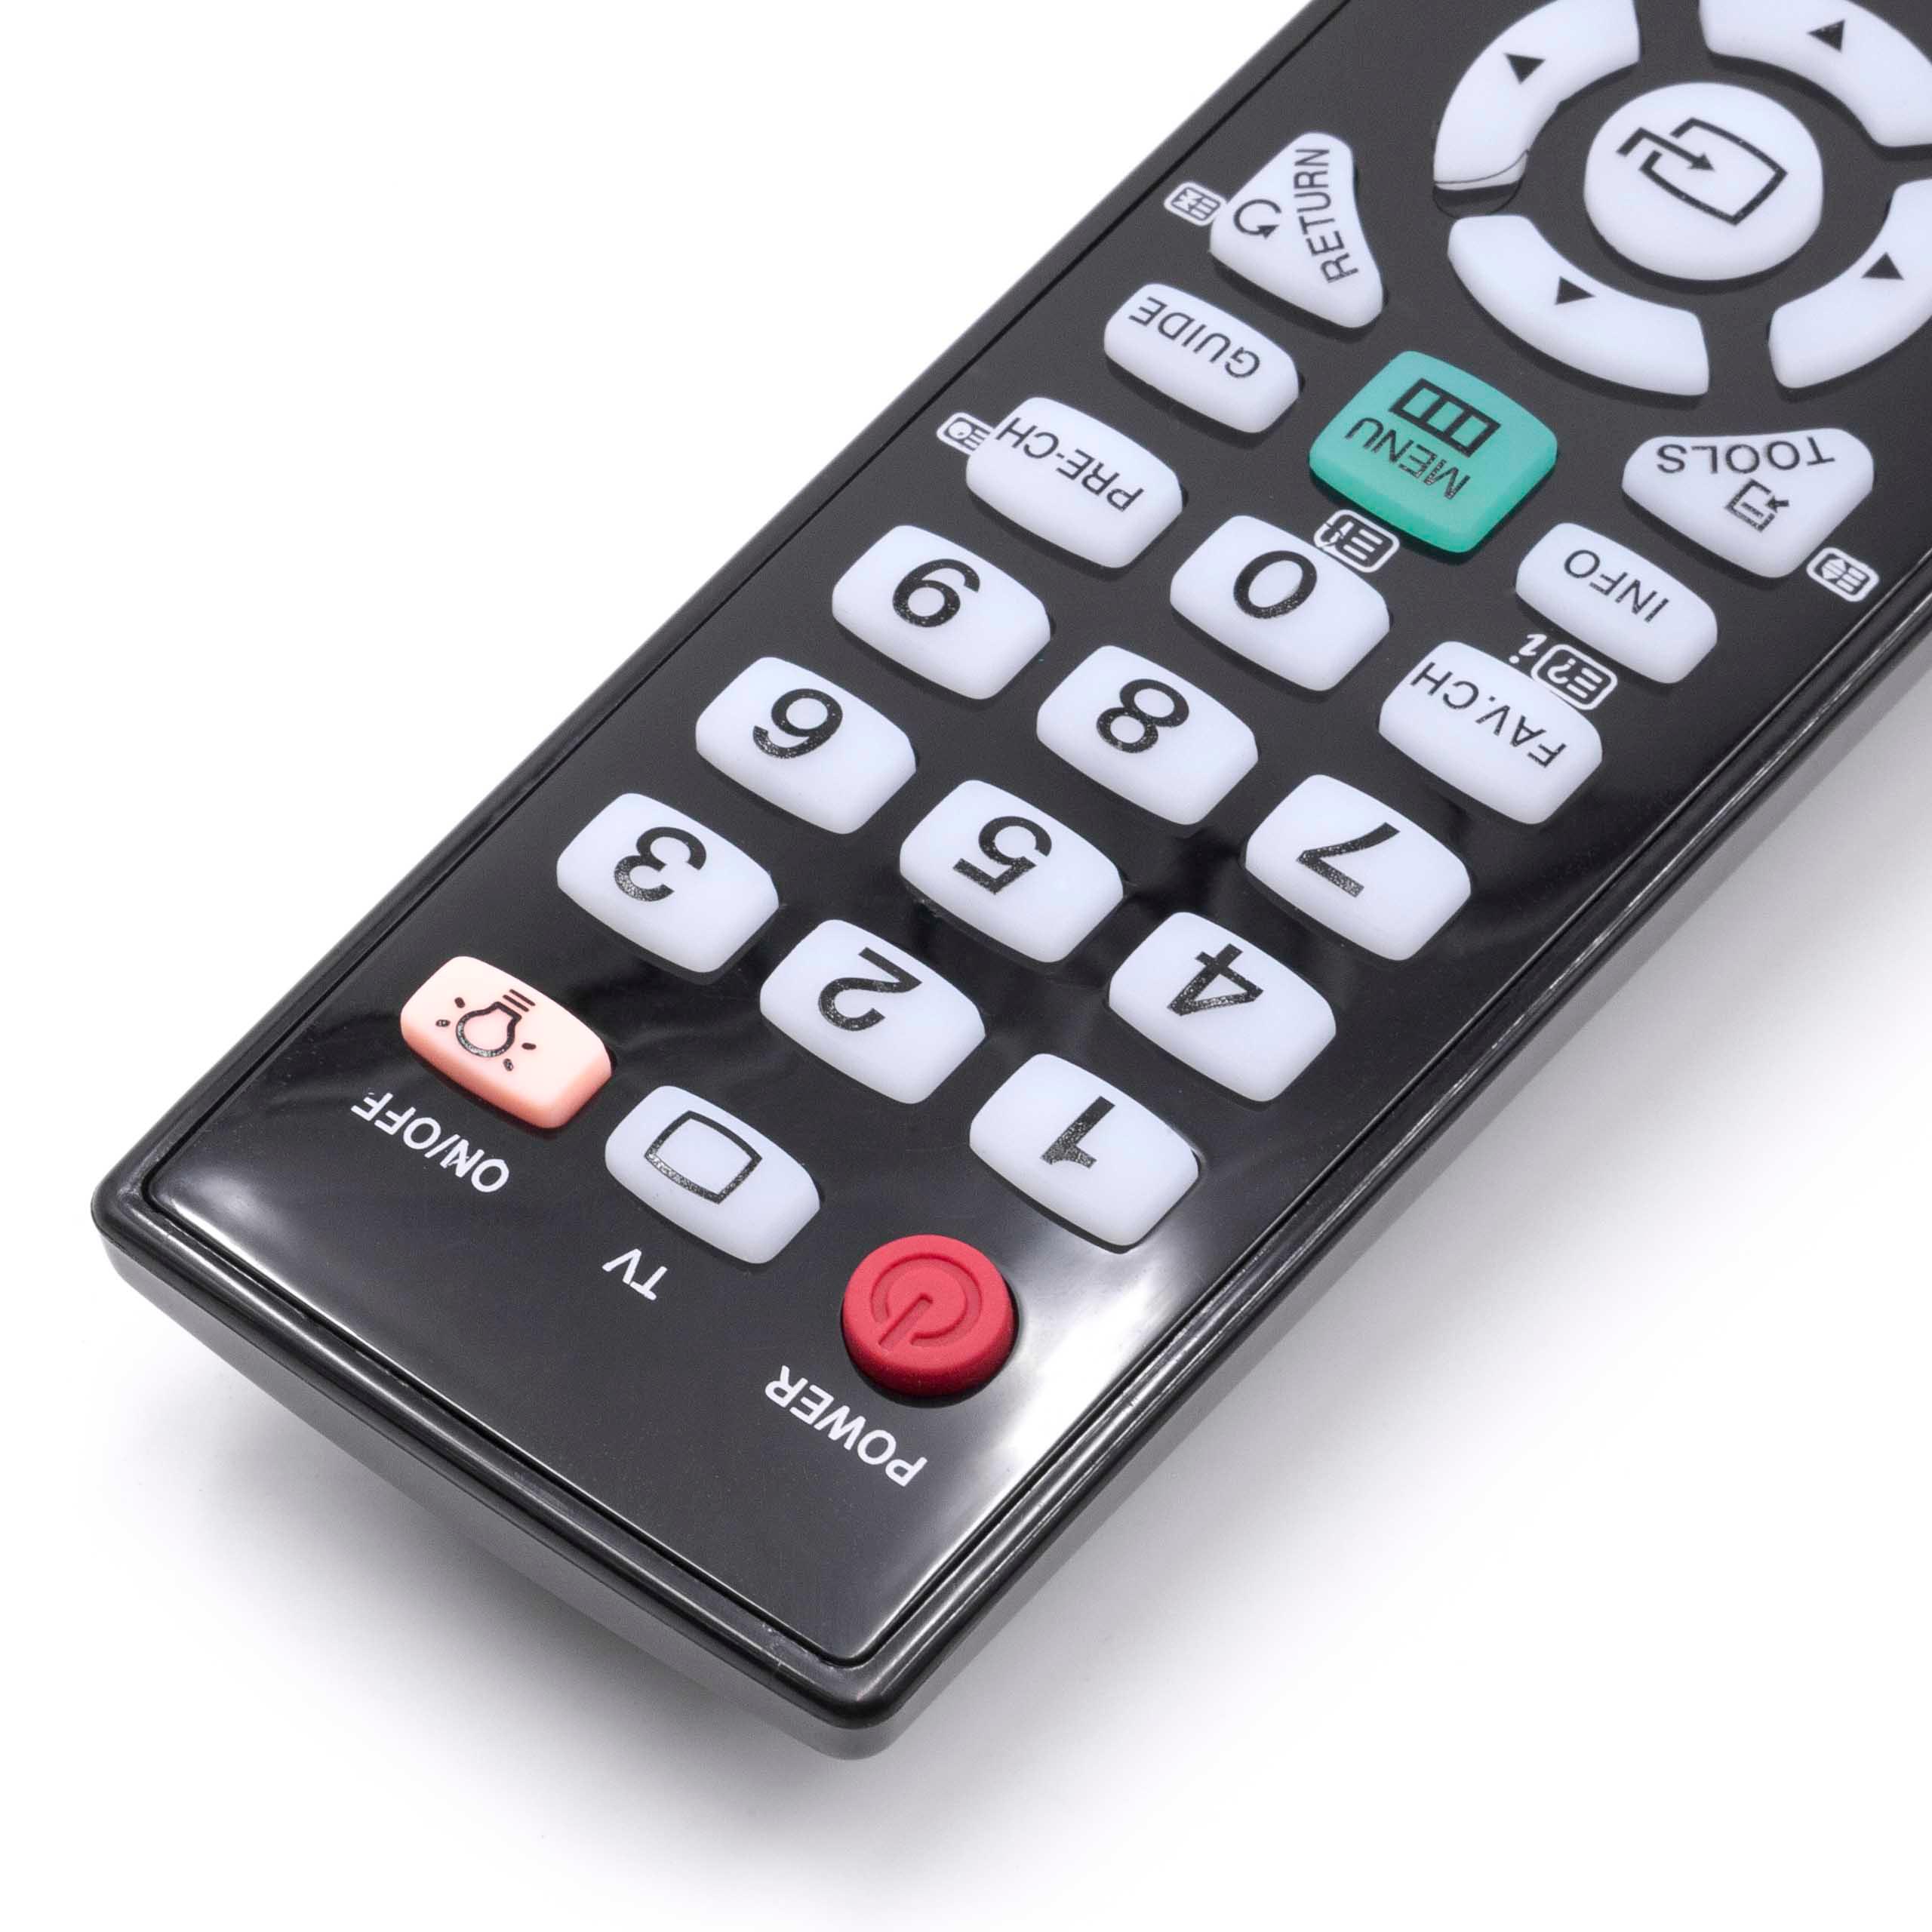 Remote Control replaces Samsung BN59-00860A, BN59-00861A, BN59-00937A for Samsung TV